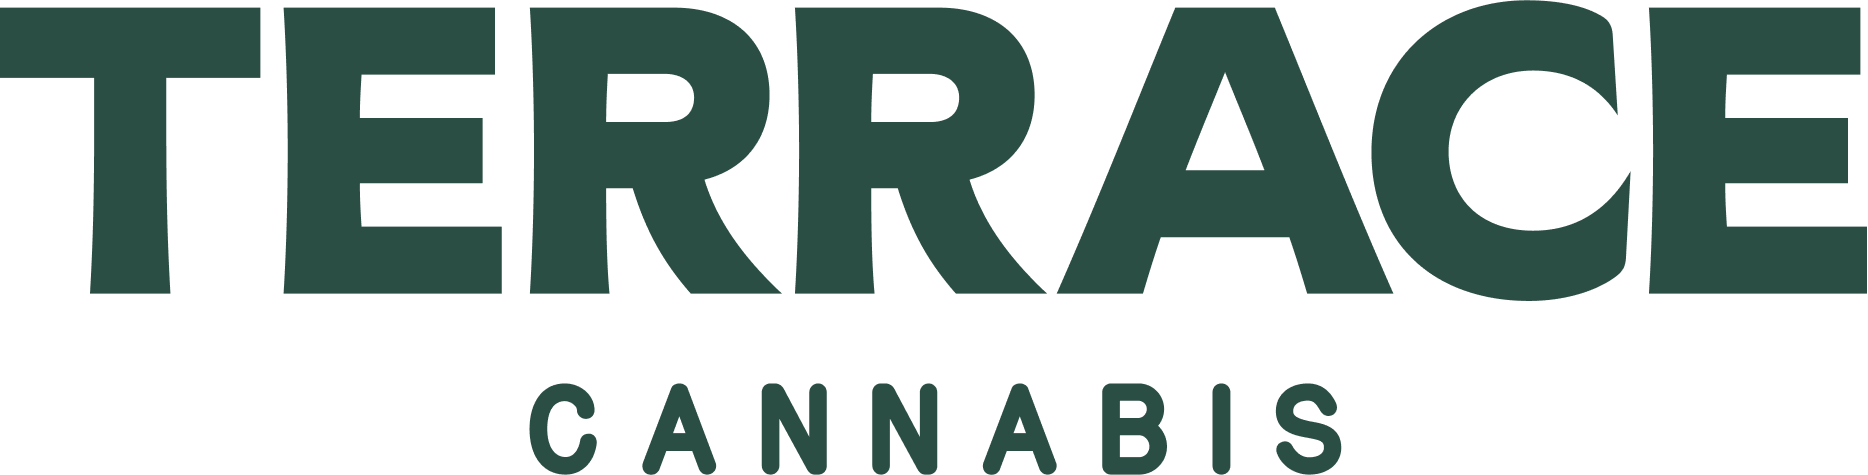 Terrace Cannabis logo